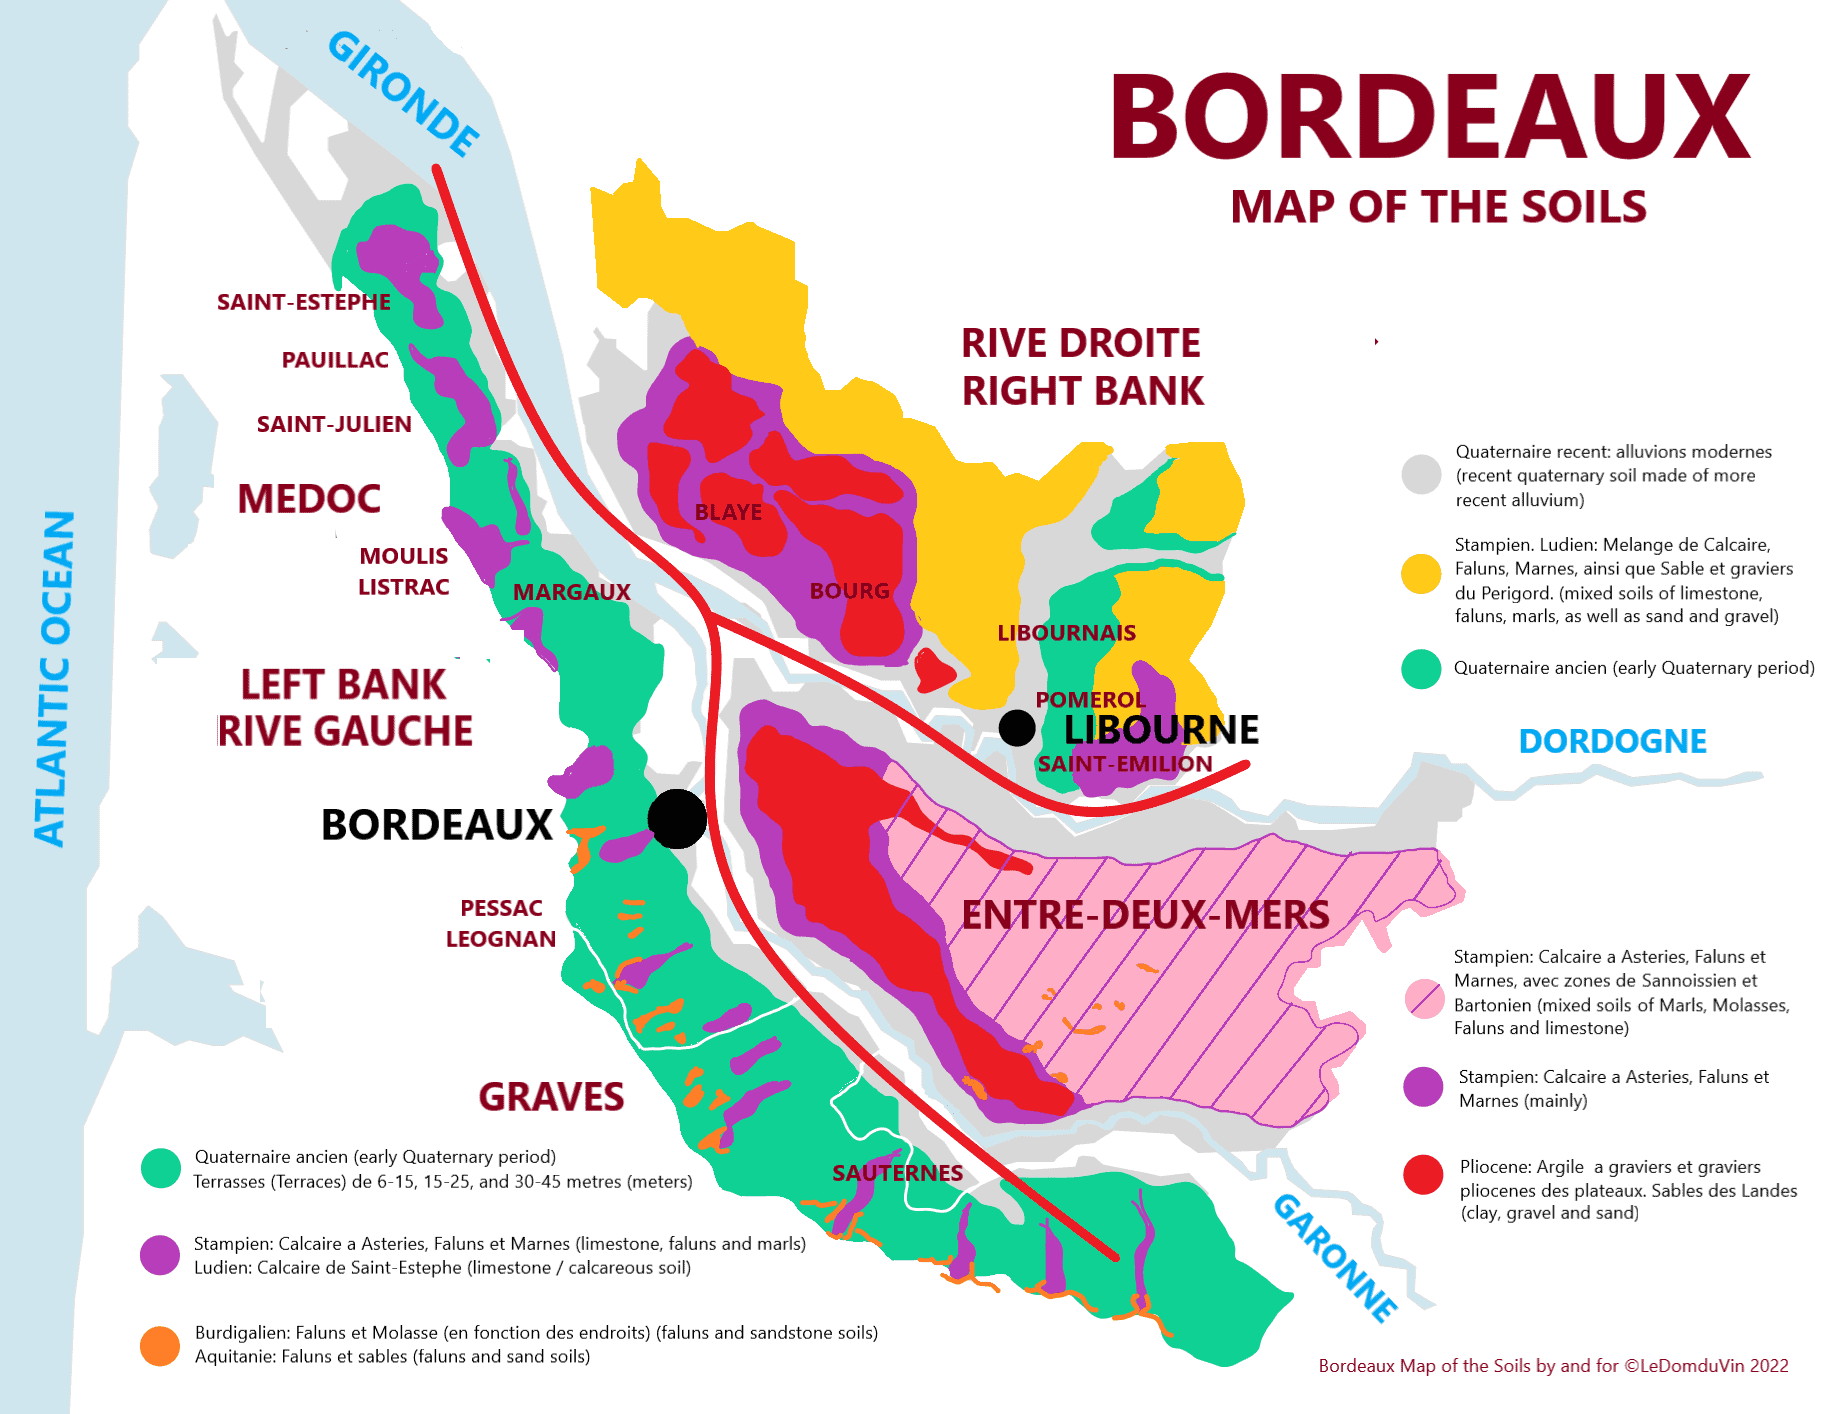 20220303 - Bordeaux Map of the soils by ©LeDomduVin 2022